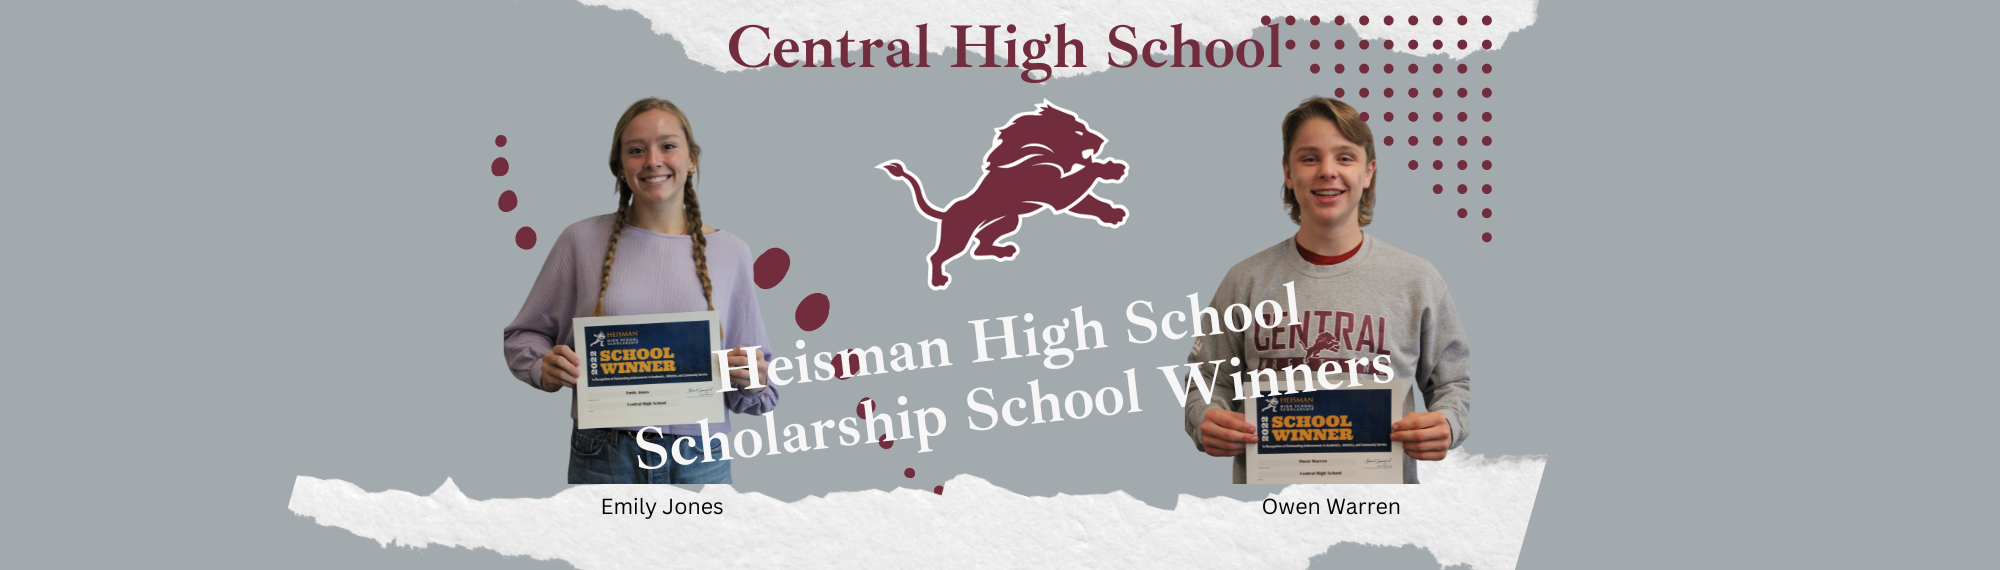 Heisman High School Scholarship School Winners